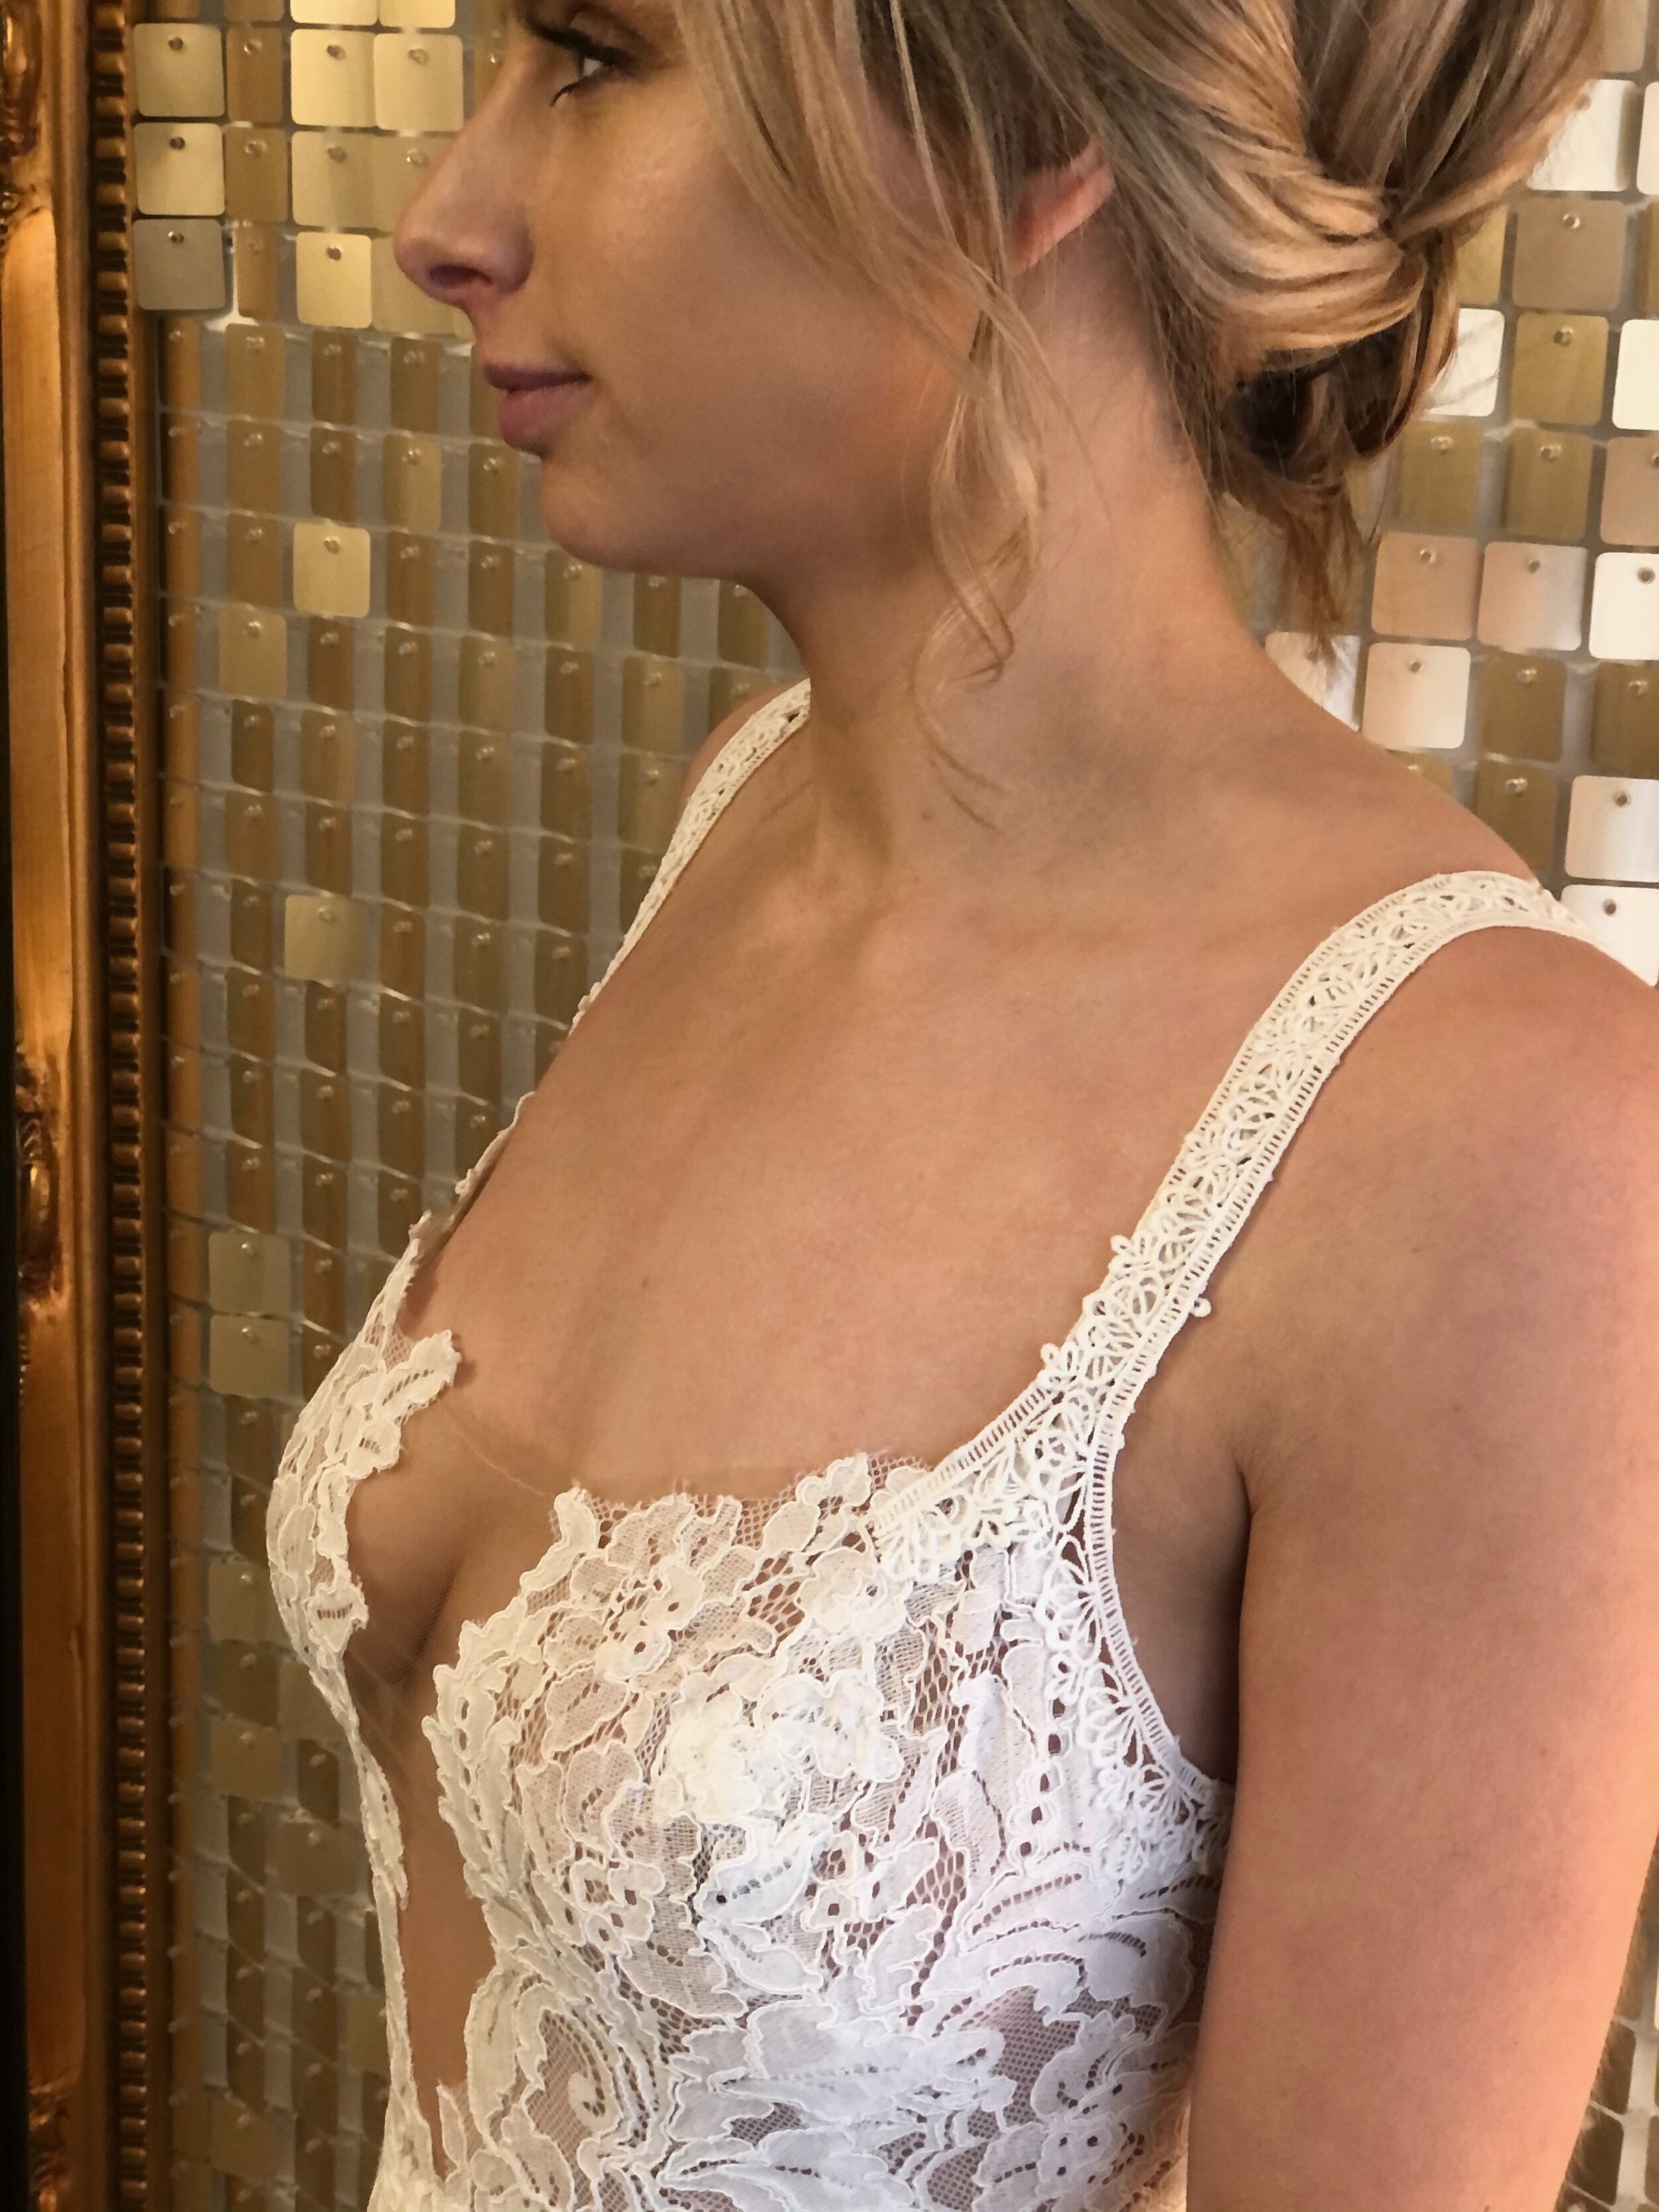 aaron egeland add photo naked bride pics